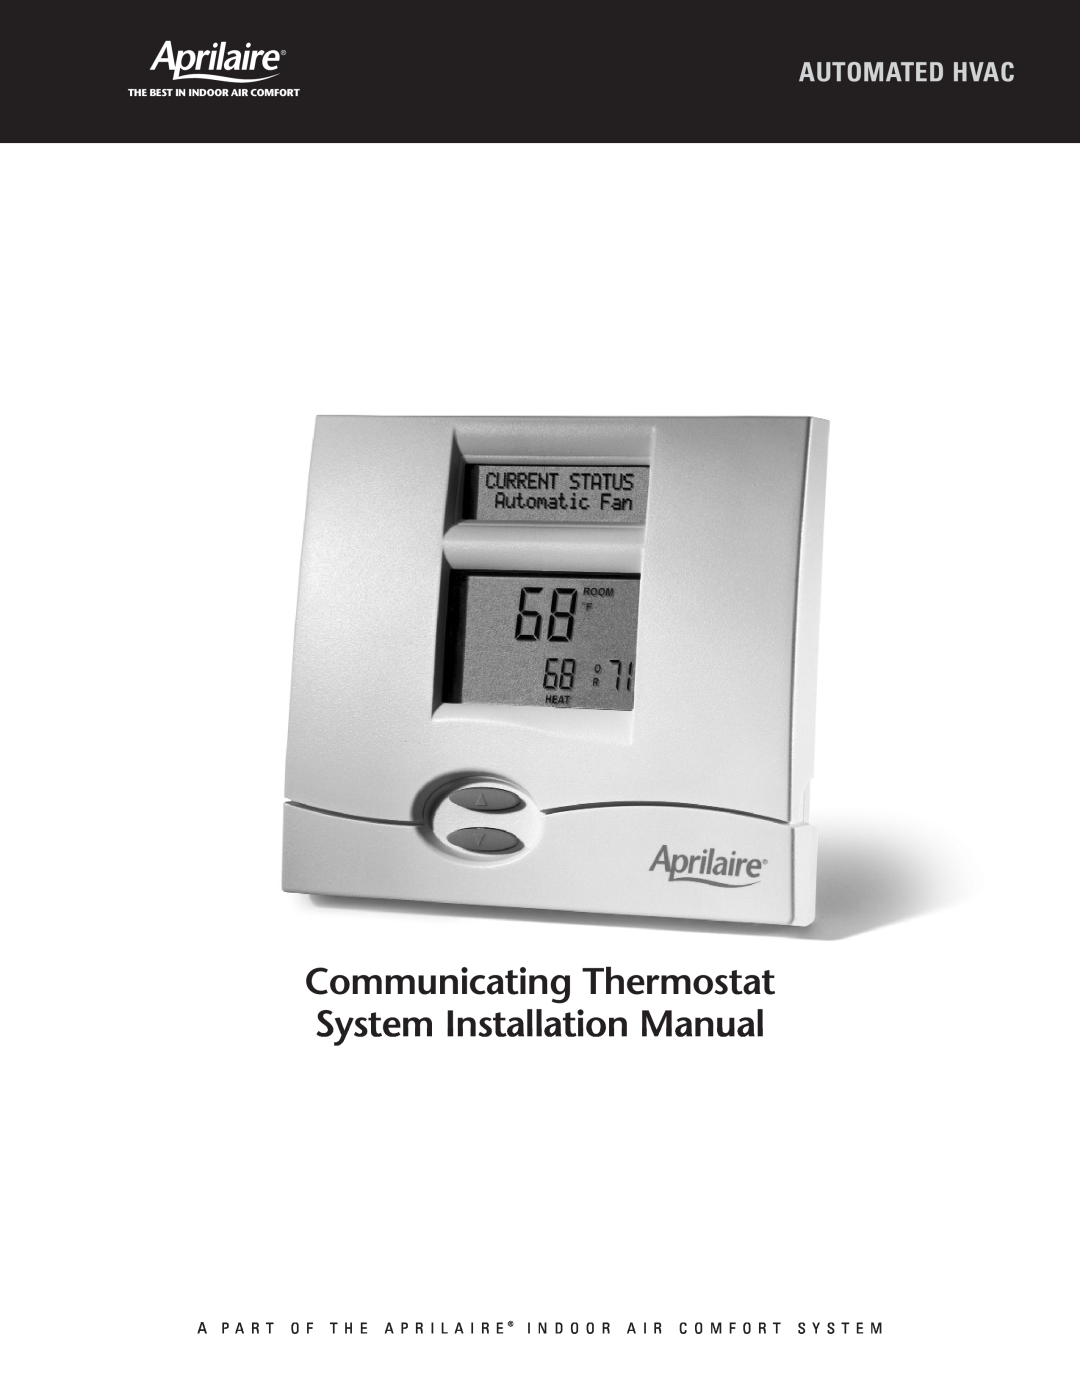 Echo 8870 installation manual Communicating Thermostat System Installation Manual, Automated Hvac 